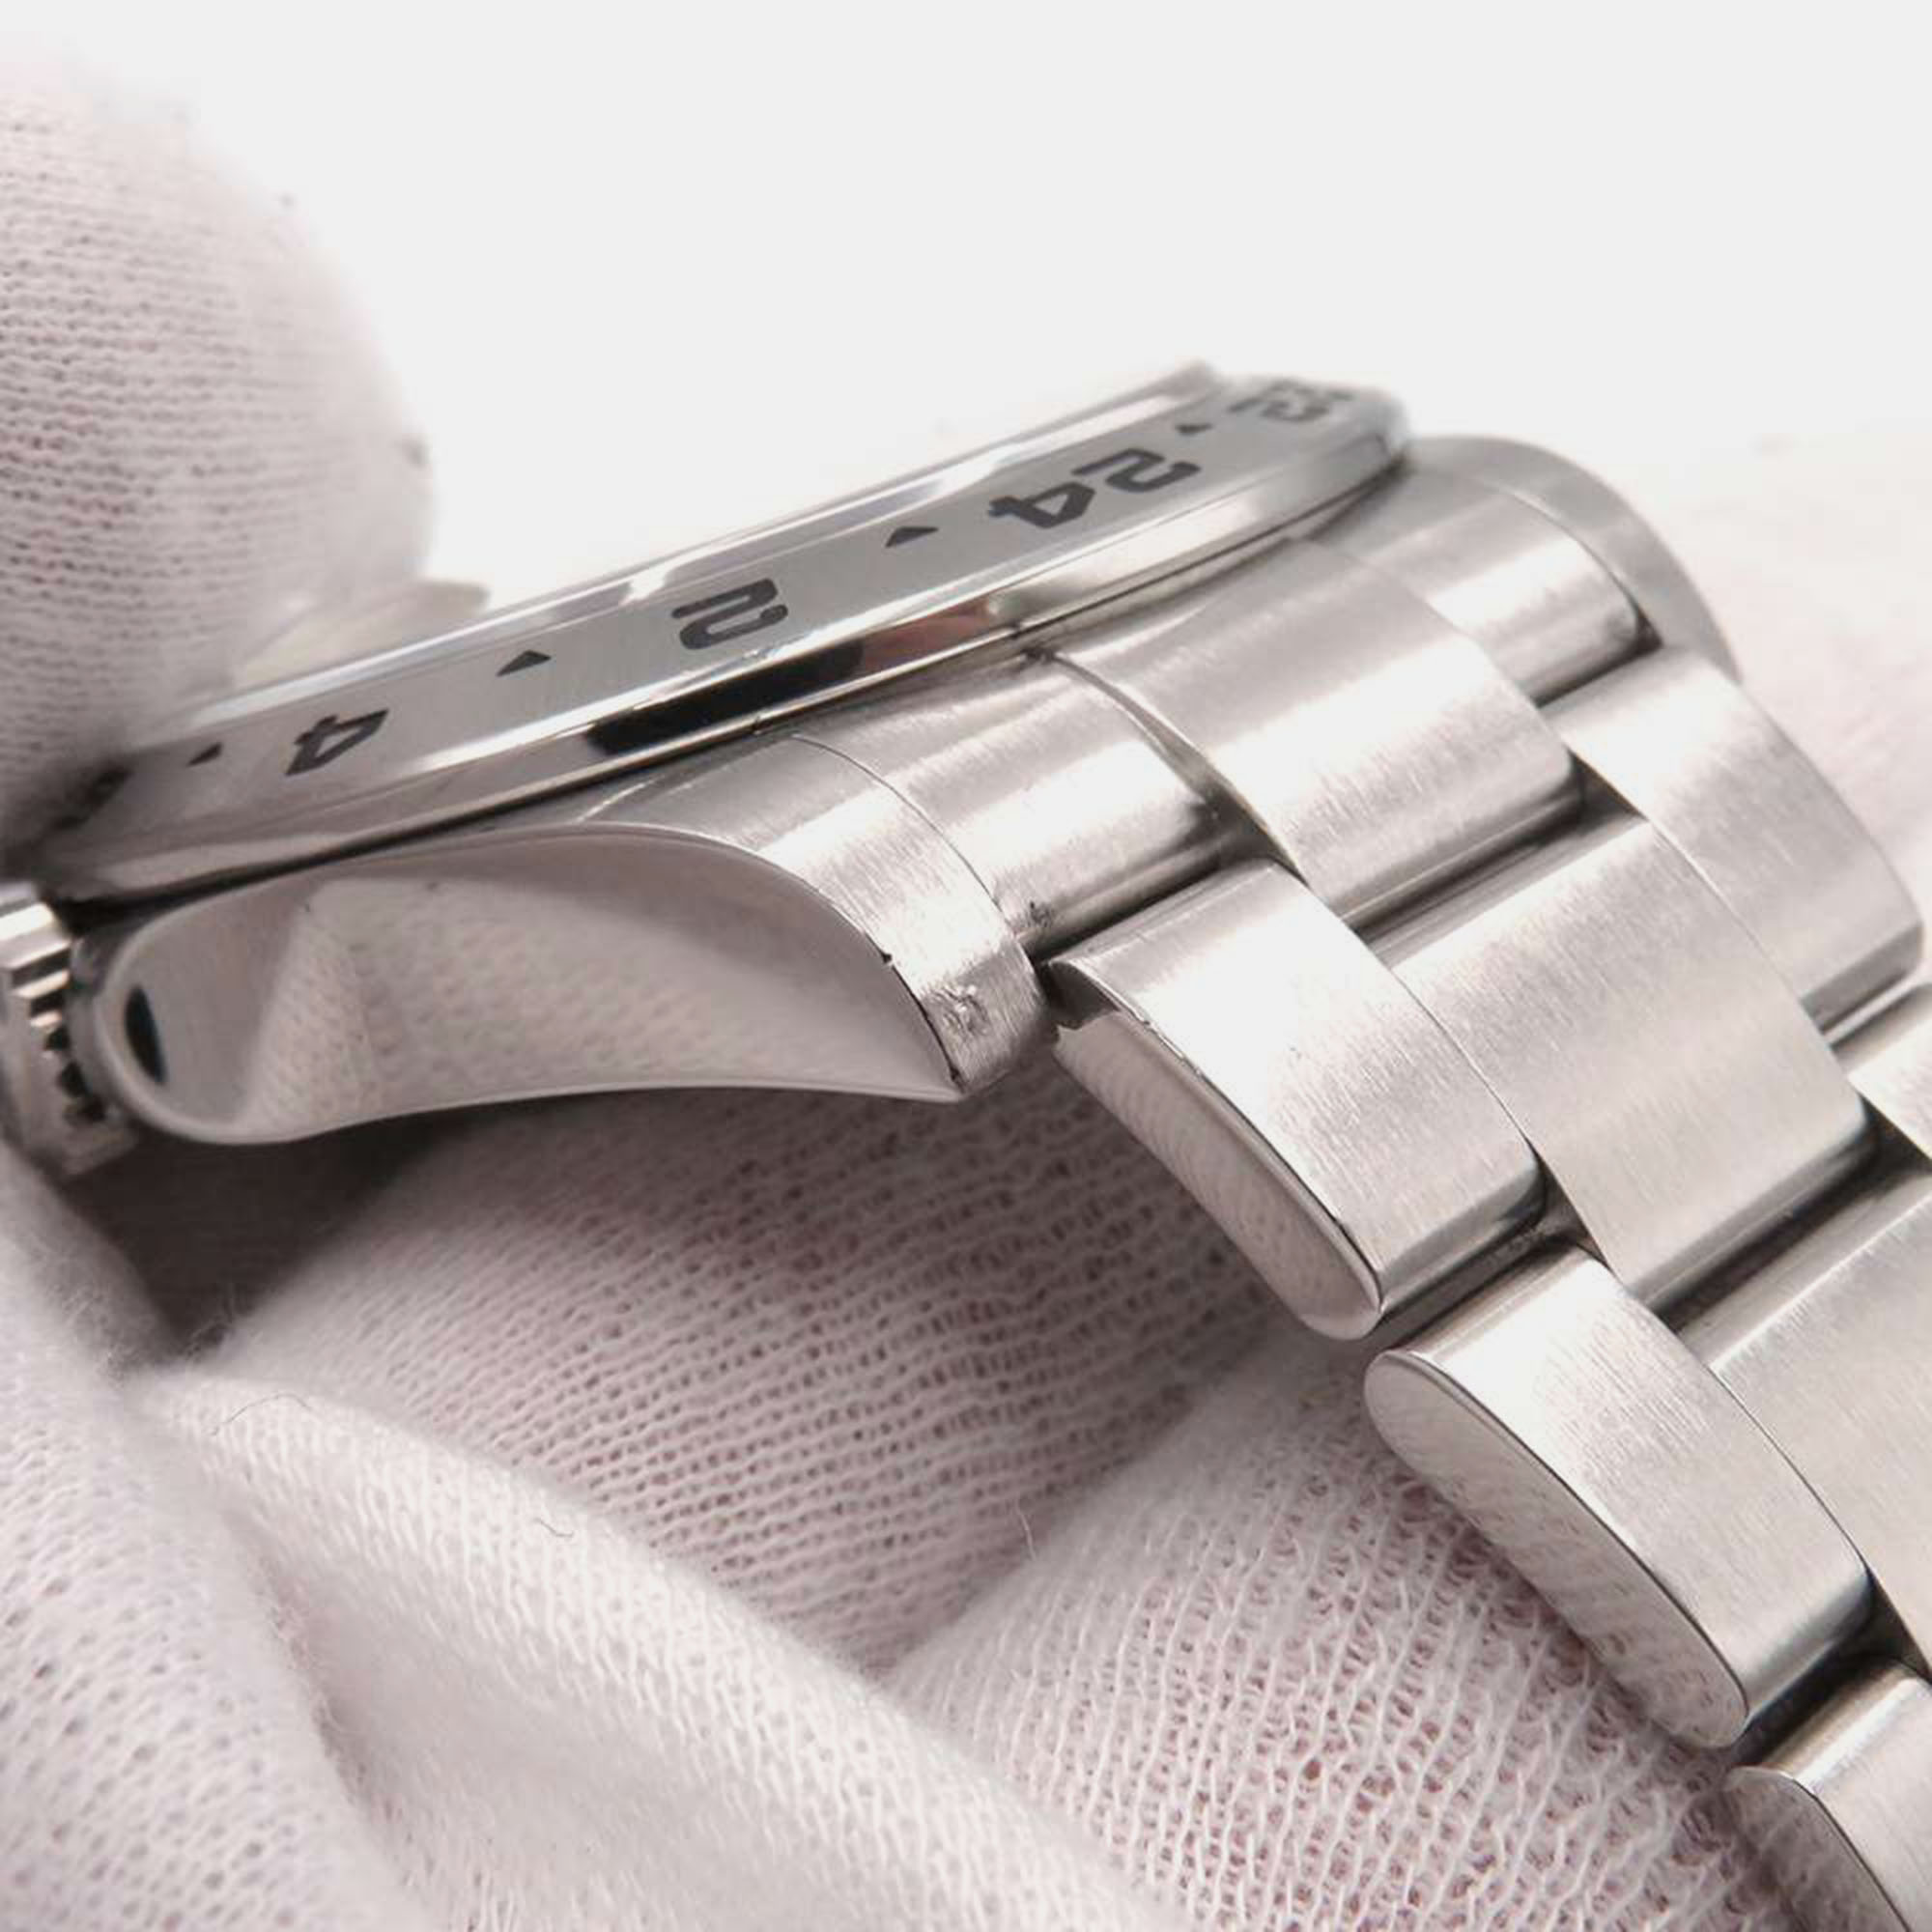 Rolex White Stainless Steel Explorer II 216570 Automatic Men's Wristwatch 42 Mm